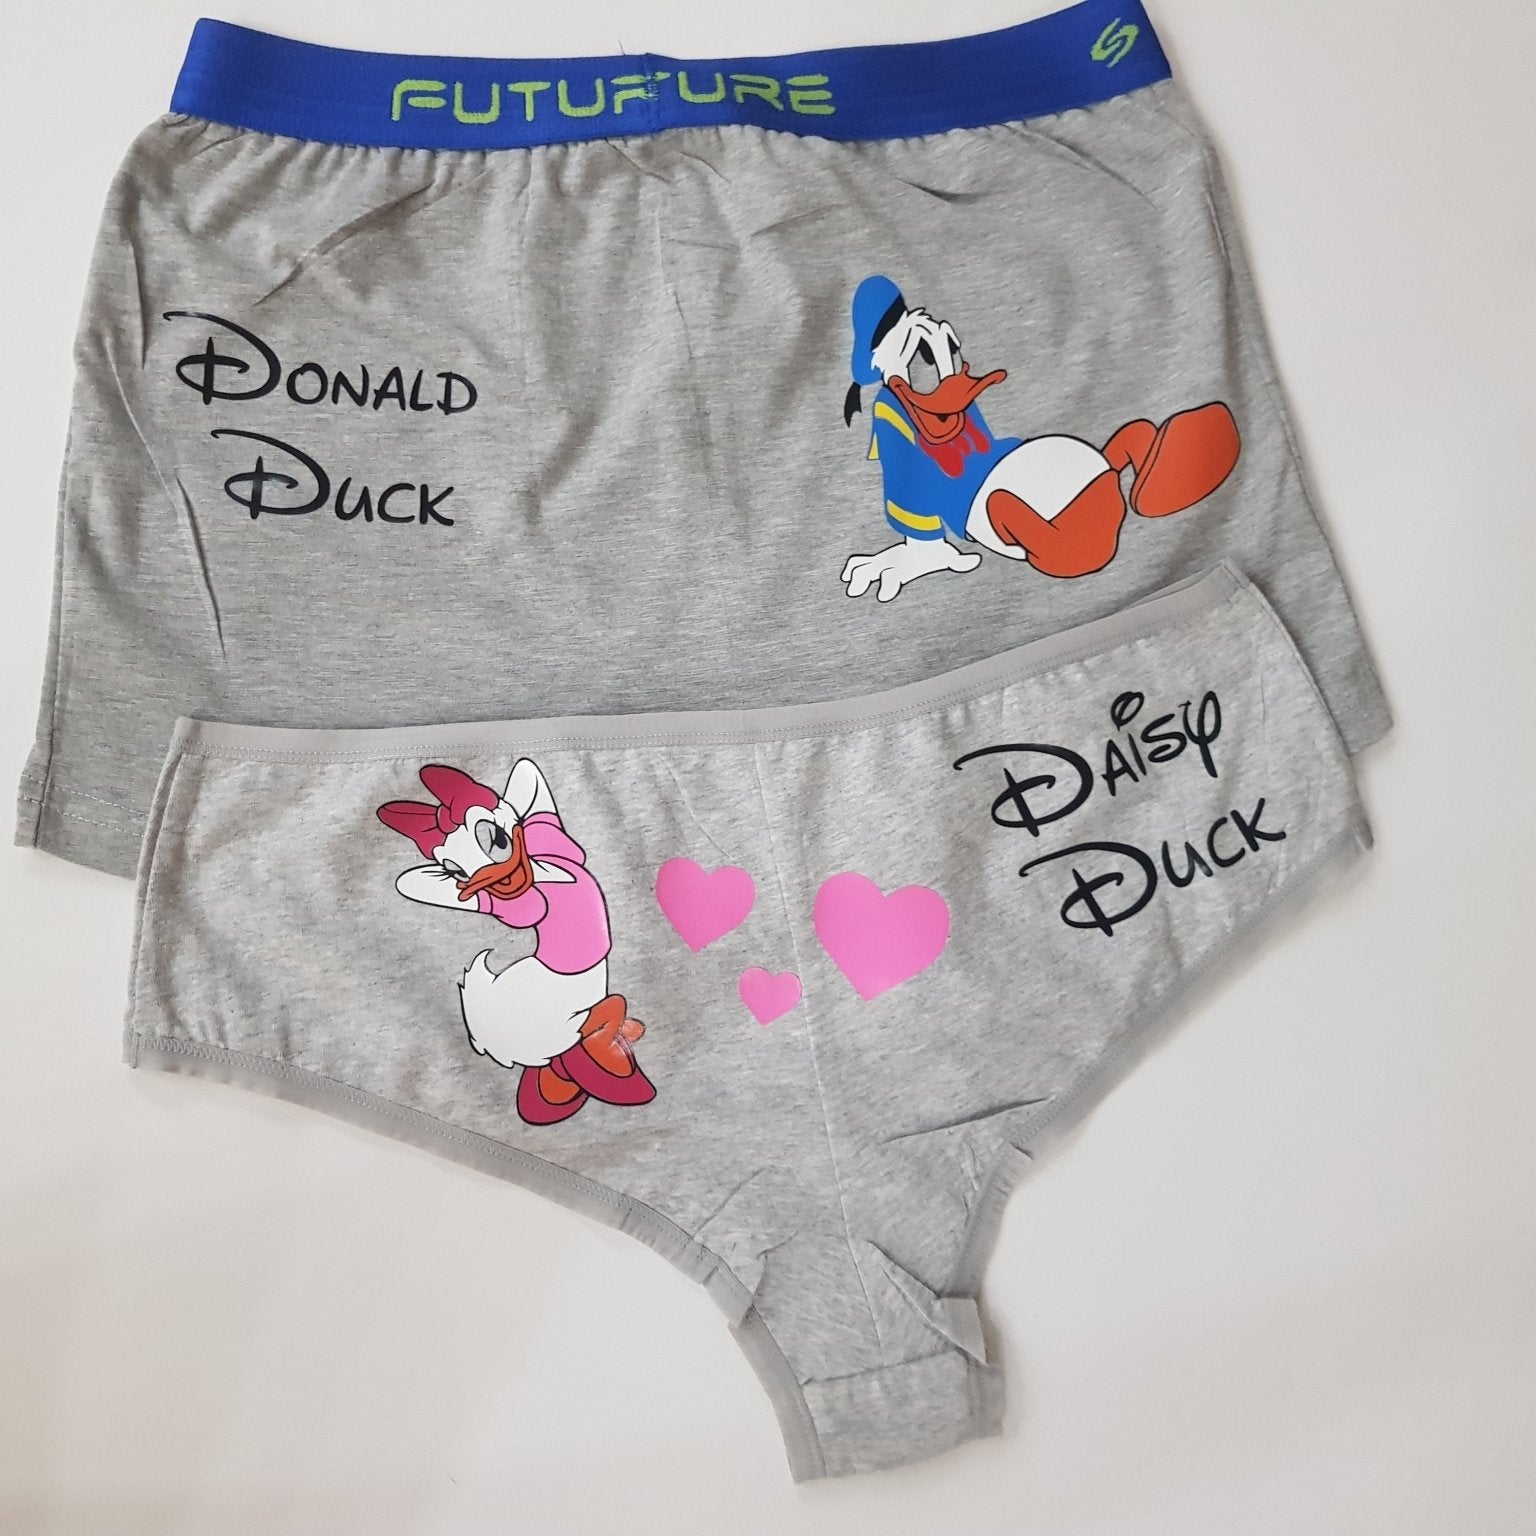 Couple underwear - Donald Duck & Daisy Duck - Etba3lly